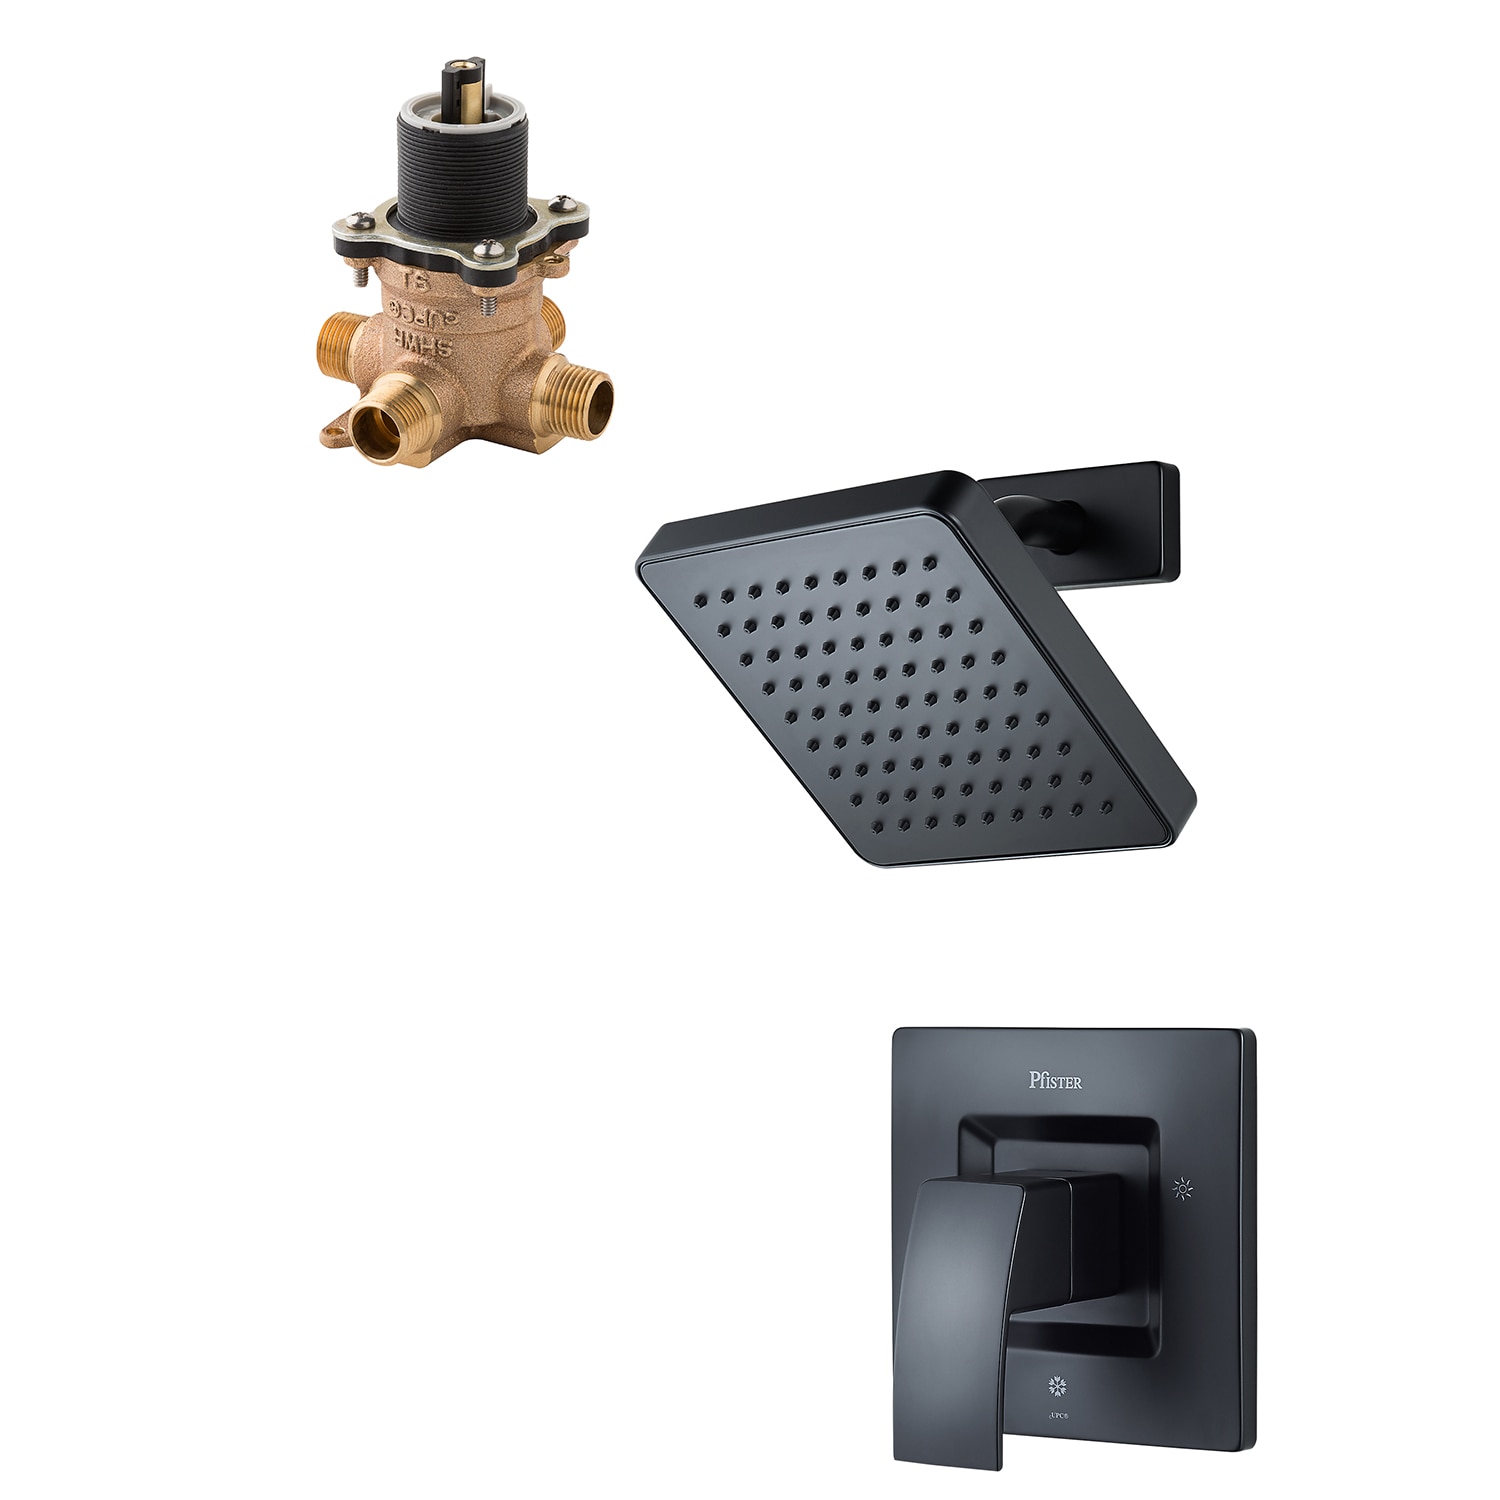 Kenzo Matte Black 1-handle Single Function Square Shower Faucet Valve Included | - Pfister LG89-7DFB-0X8-310A-L